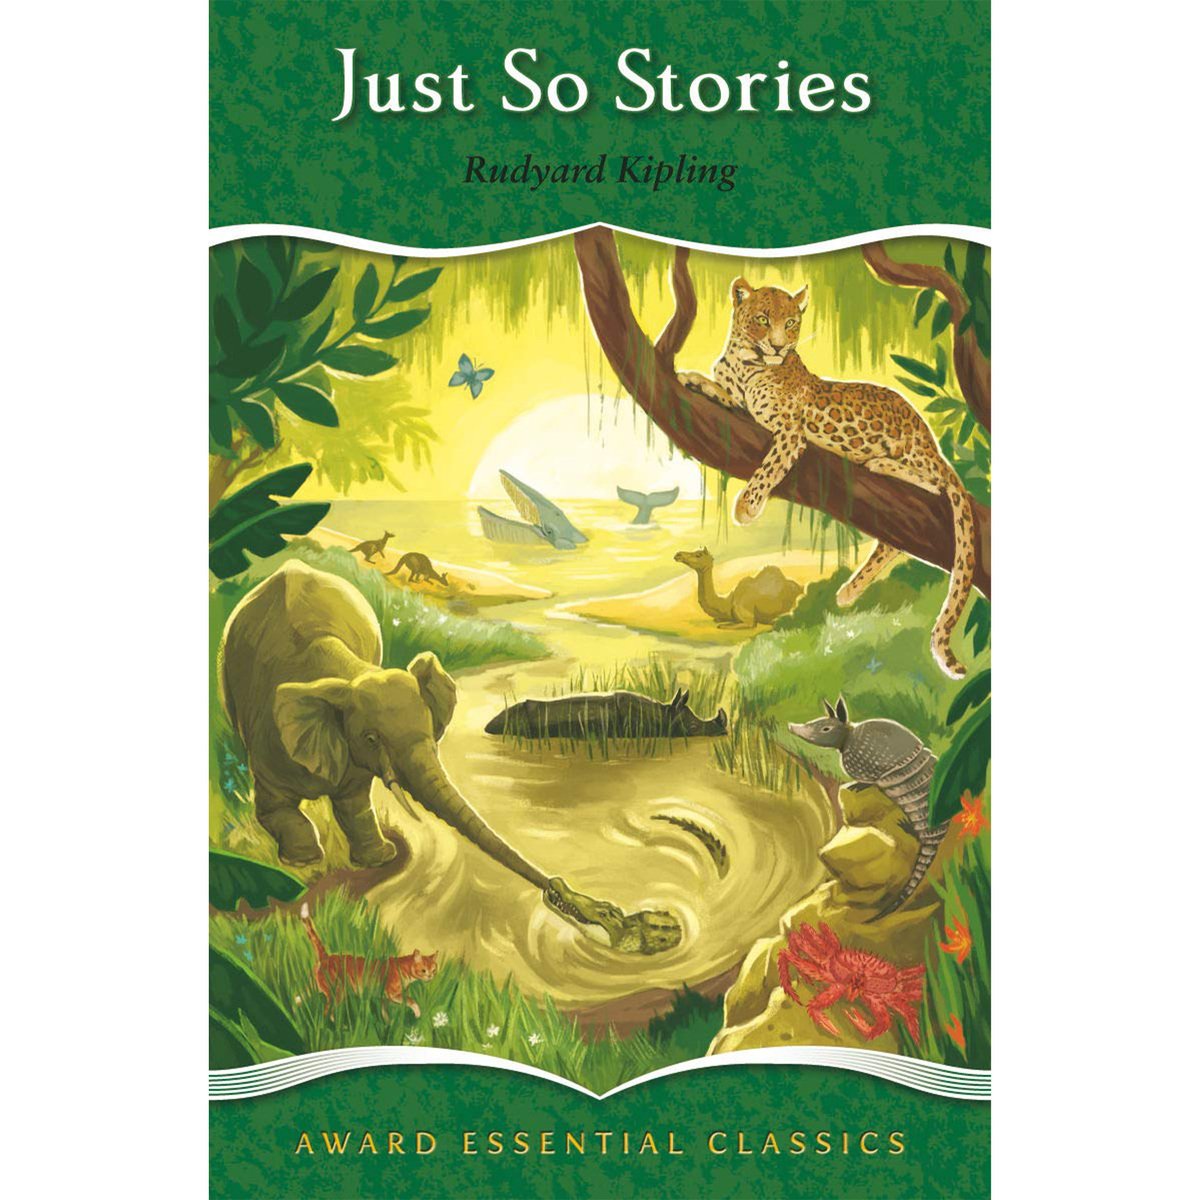 Award Essential Classics: Just So Stories